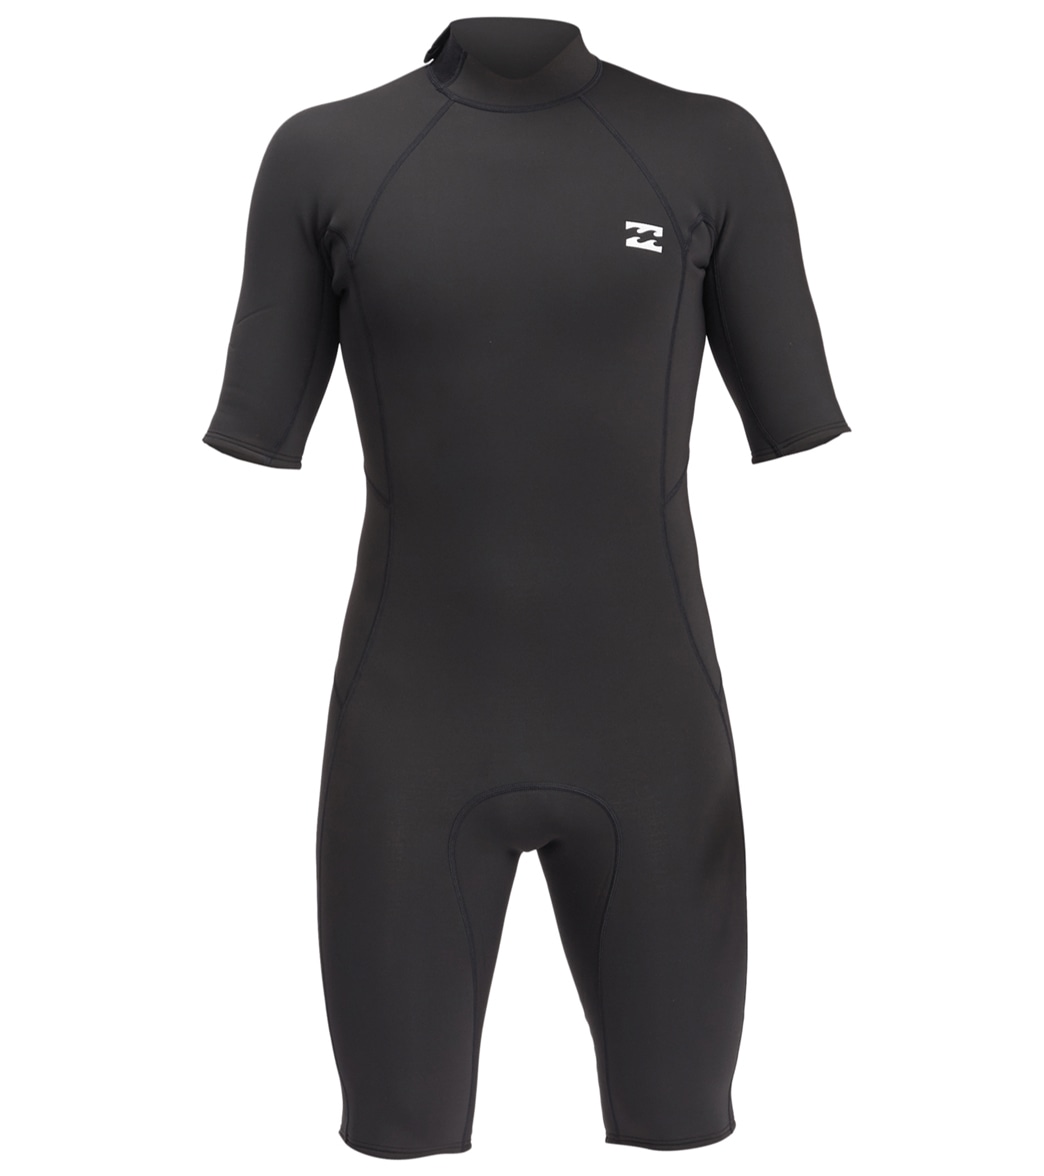 Billabong Men's Absolute Back Zip Spring Suit - Black Large - Swimoutlet.com